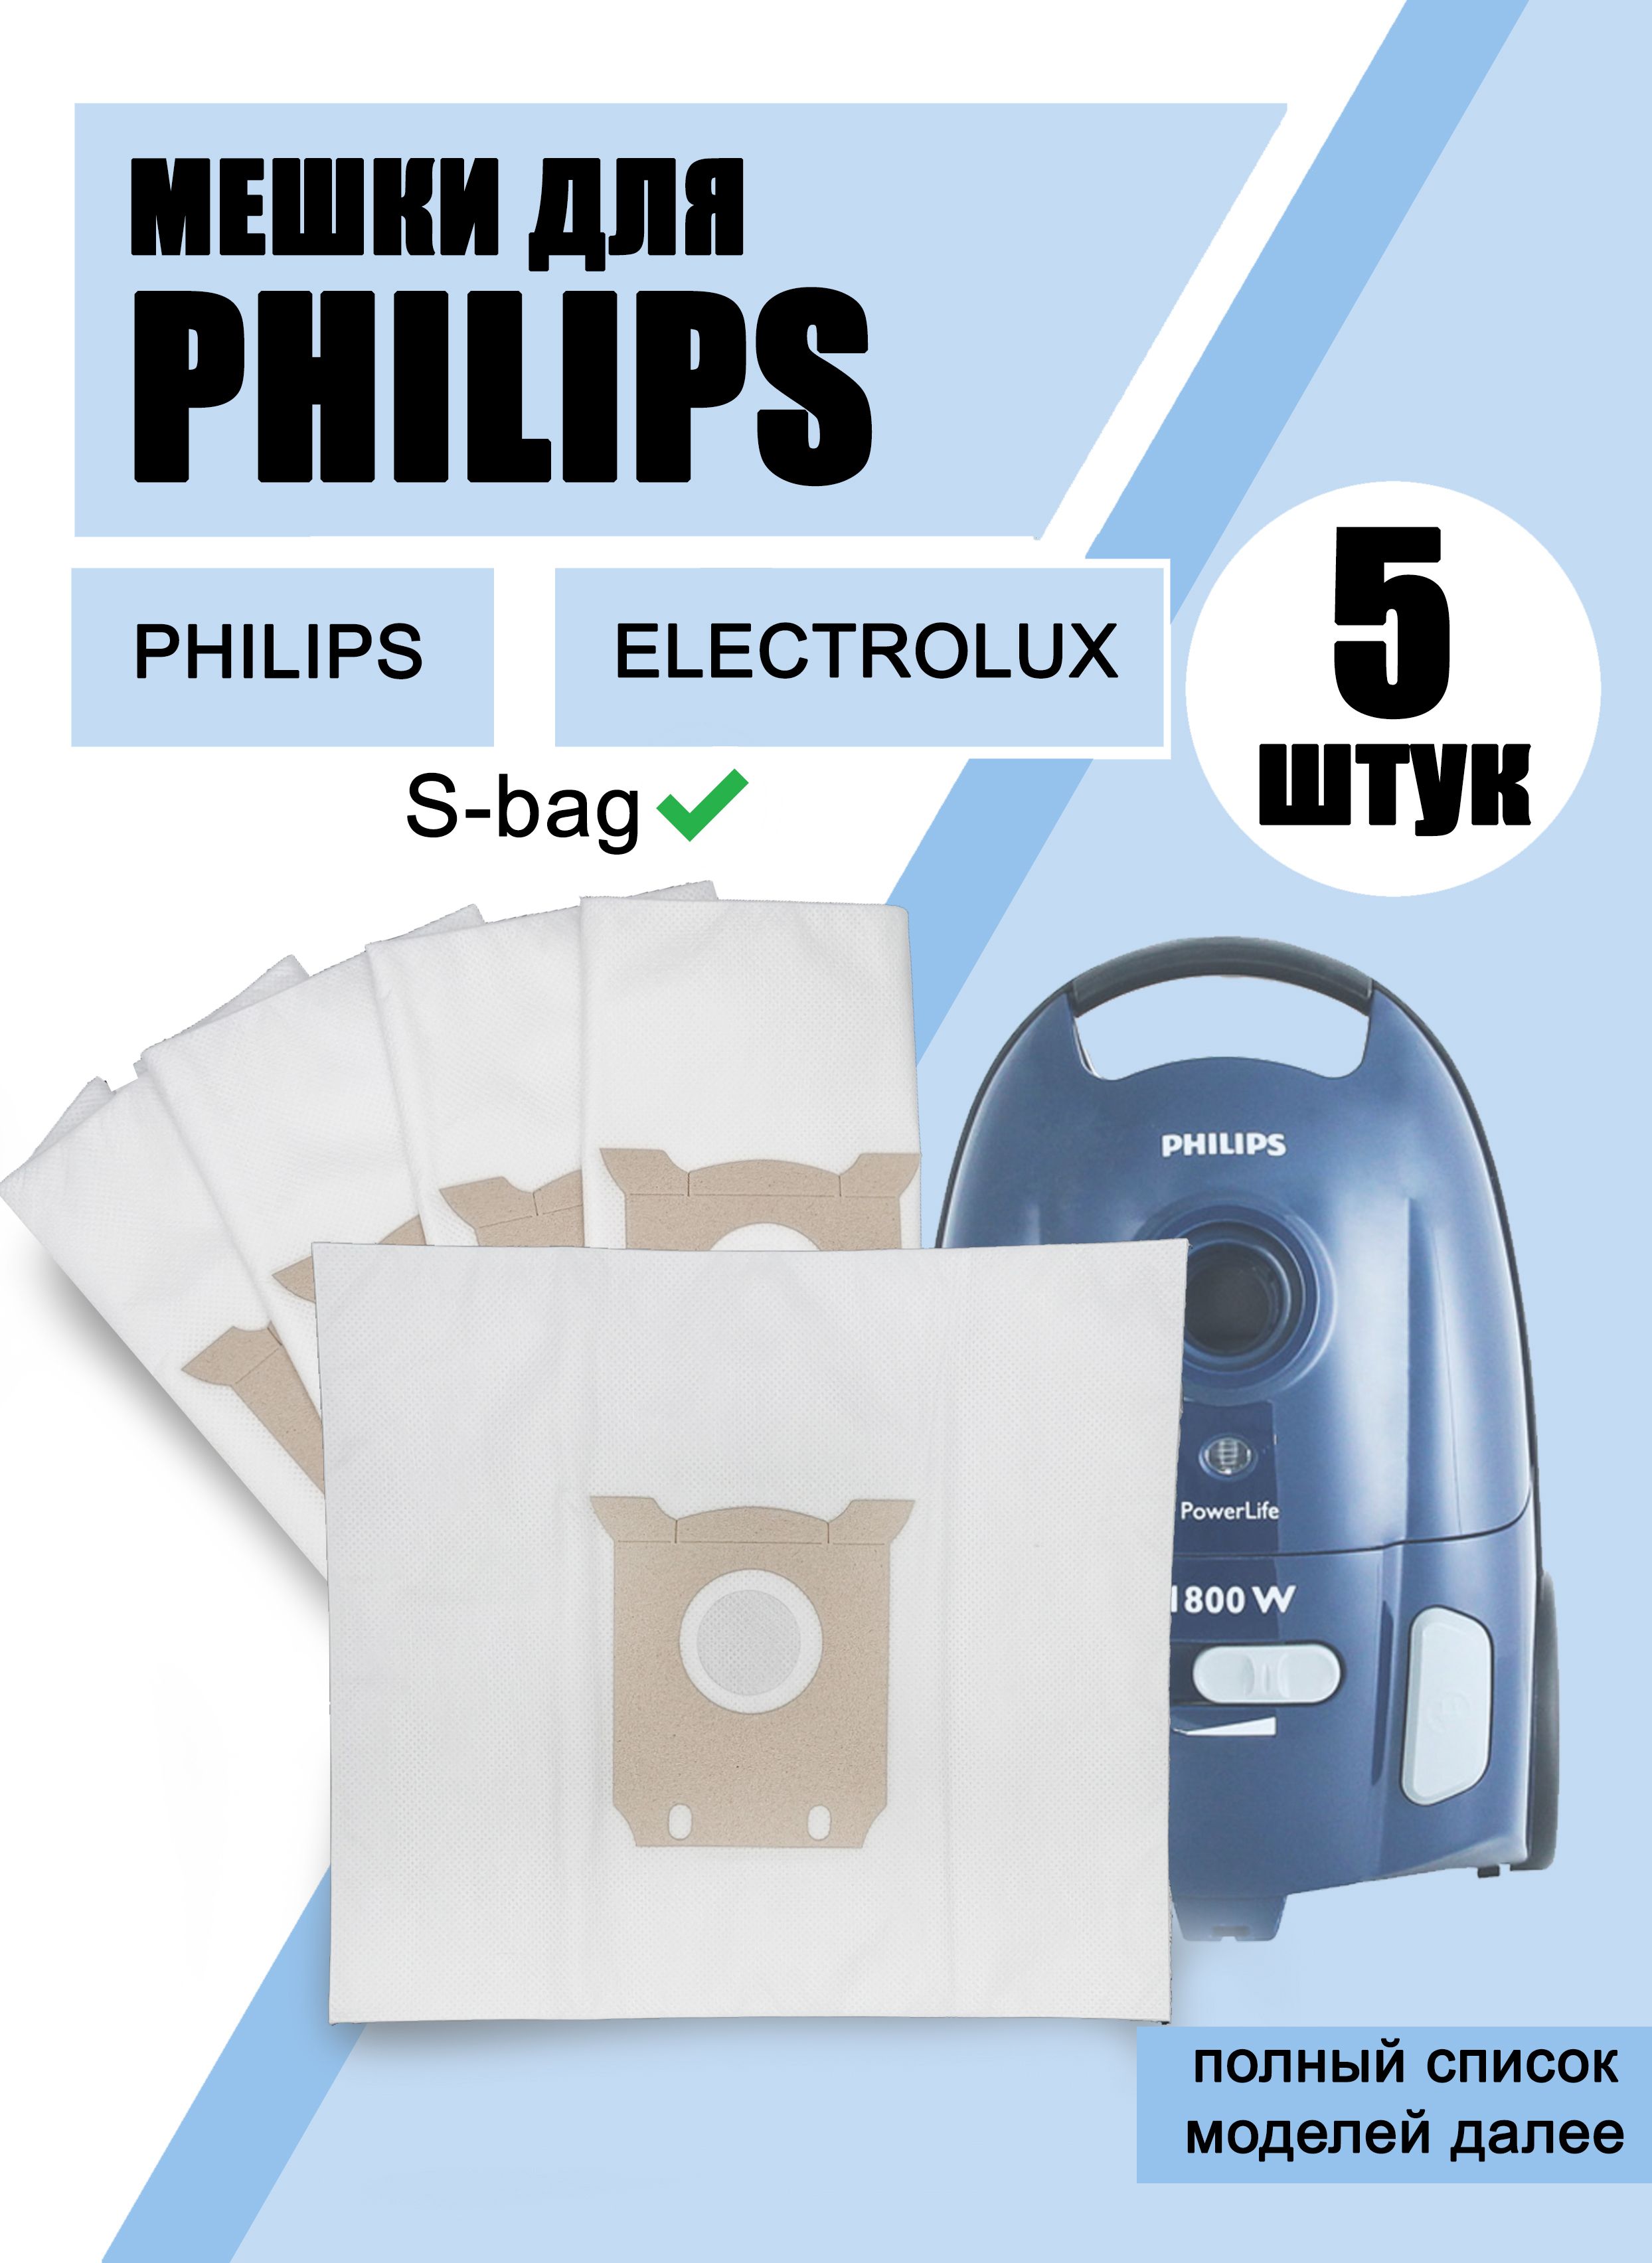 Philips FC 9170 мешок. Мешок пылесборник пылесоса Филипс zx0043s (одноразовый). XT-503 мешок-пылесборник. Пылесос Филипс с мешком.